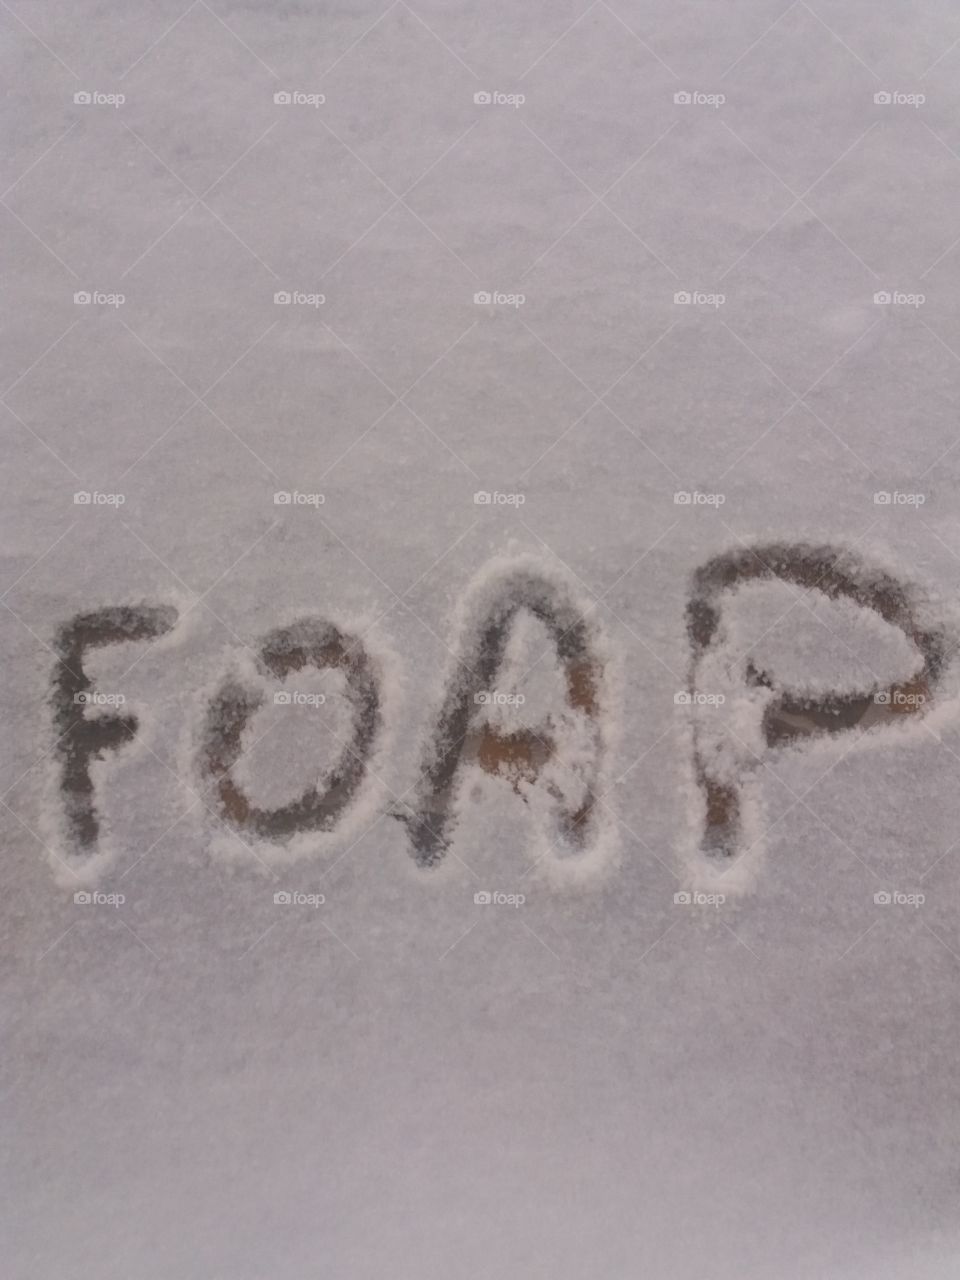 Writing Foap in the snow